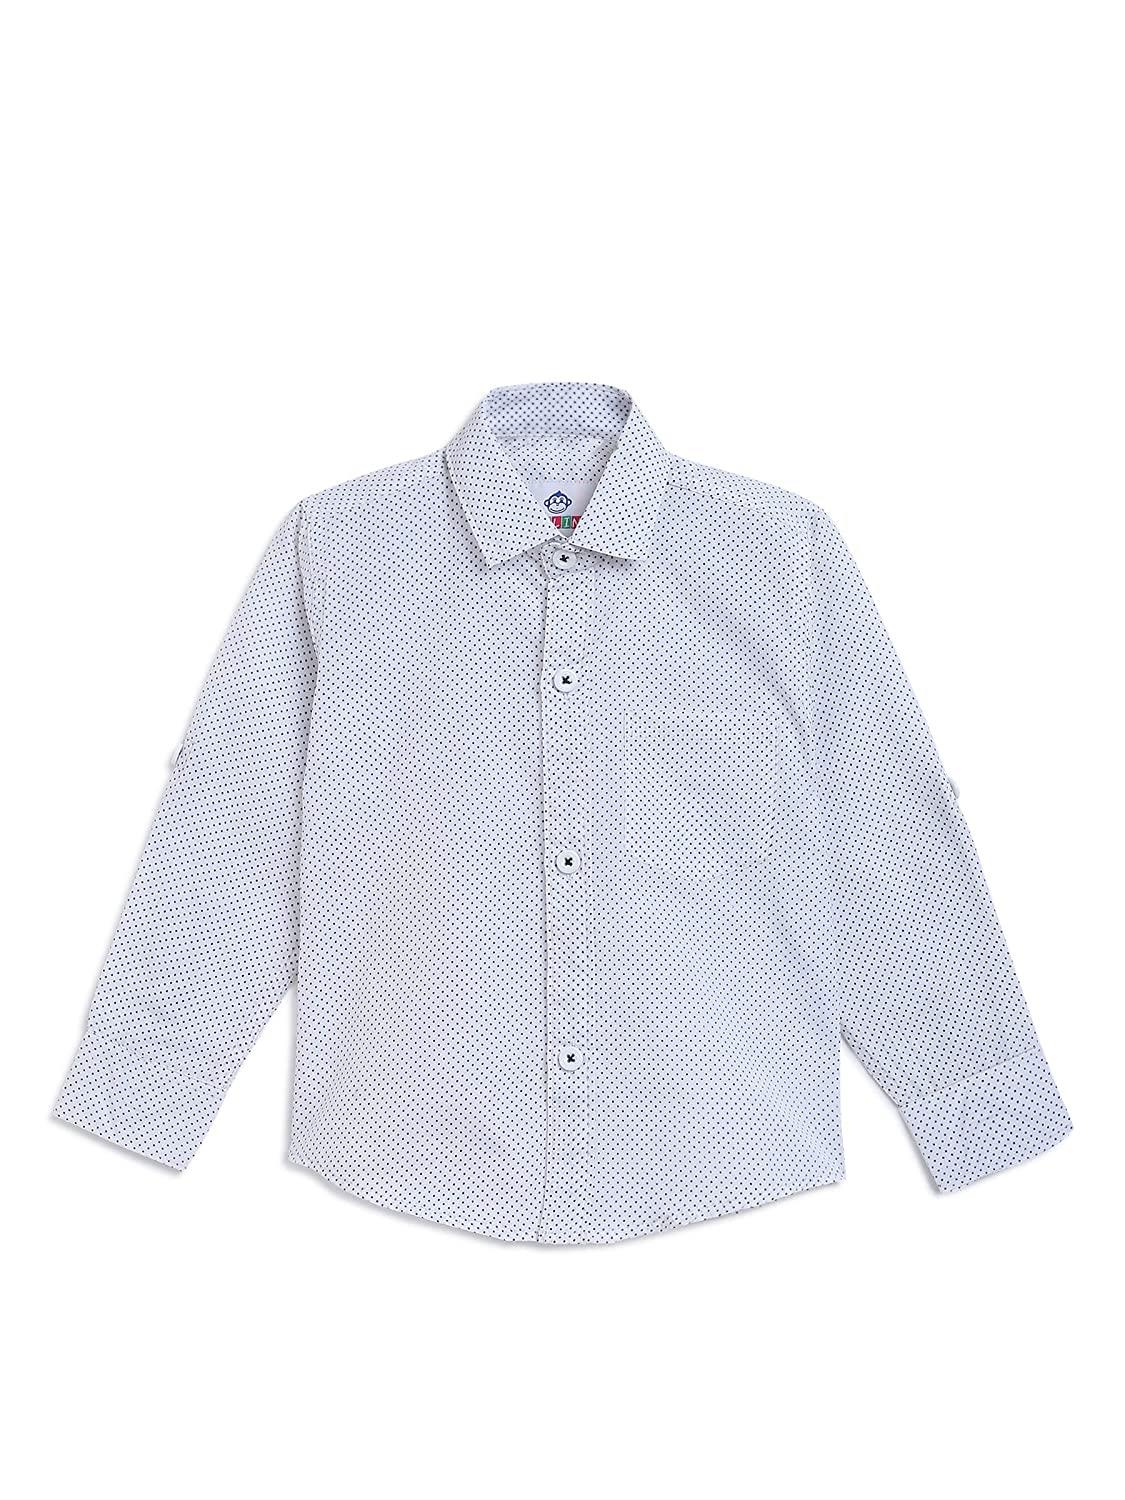 Kidling Printed Cotton Blend Shirt for Boys